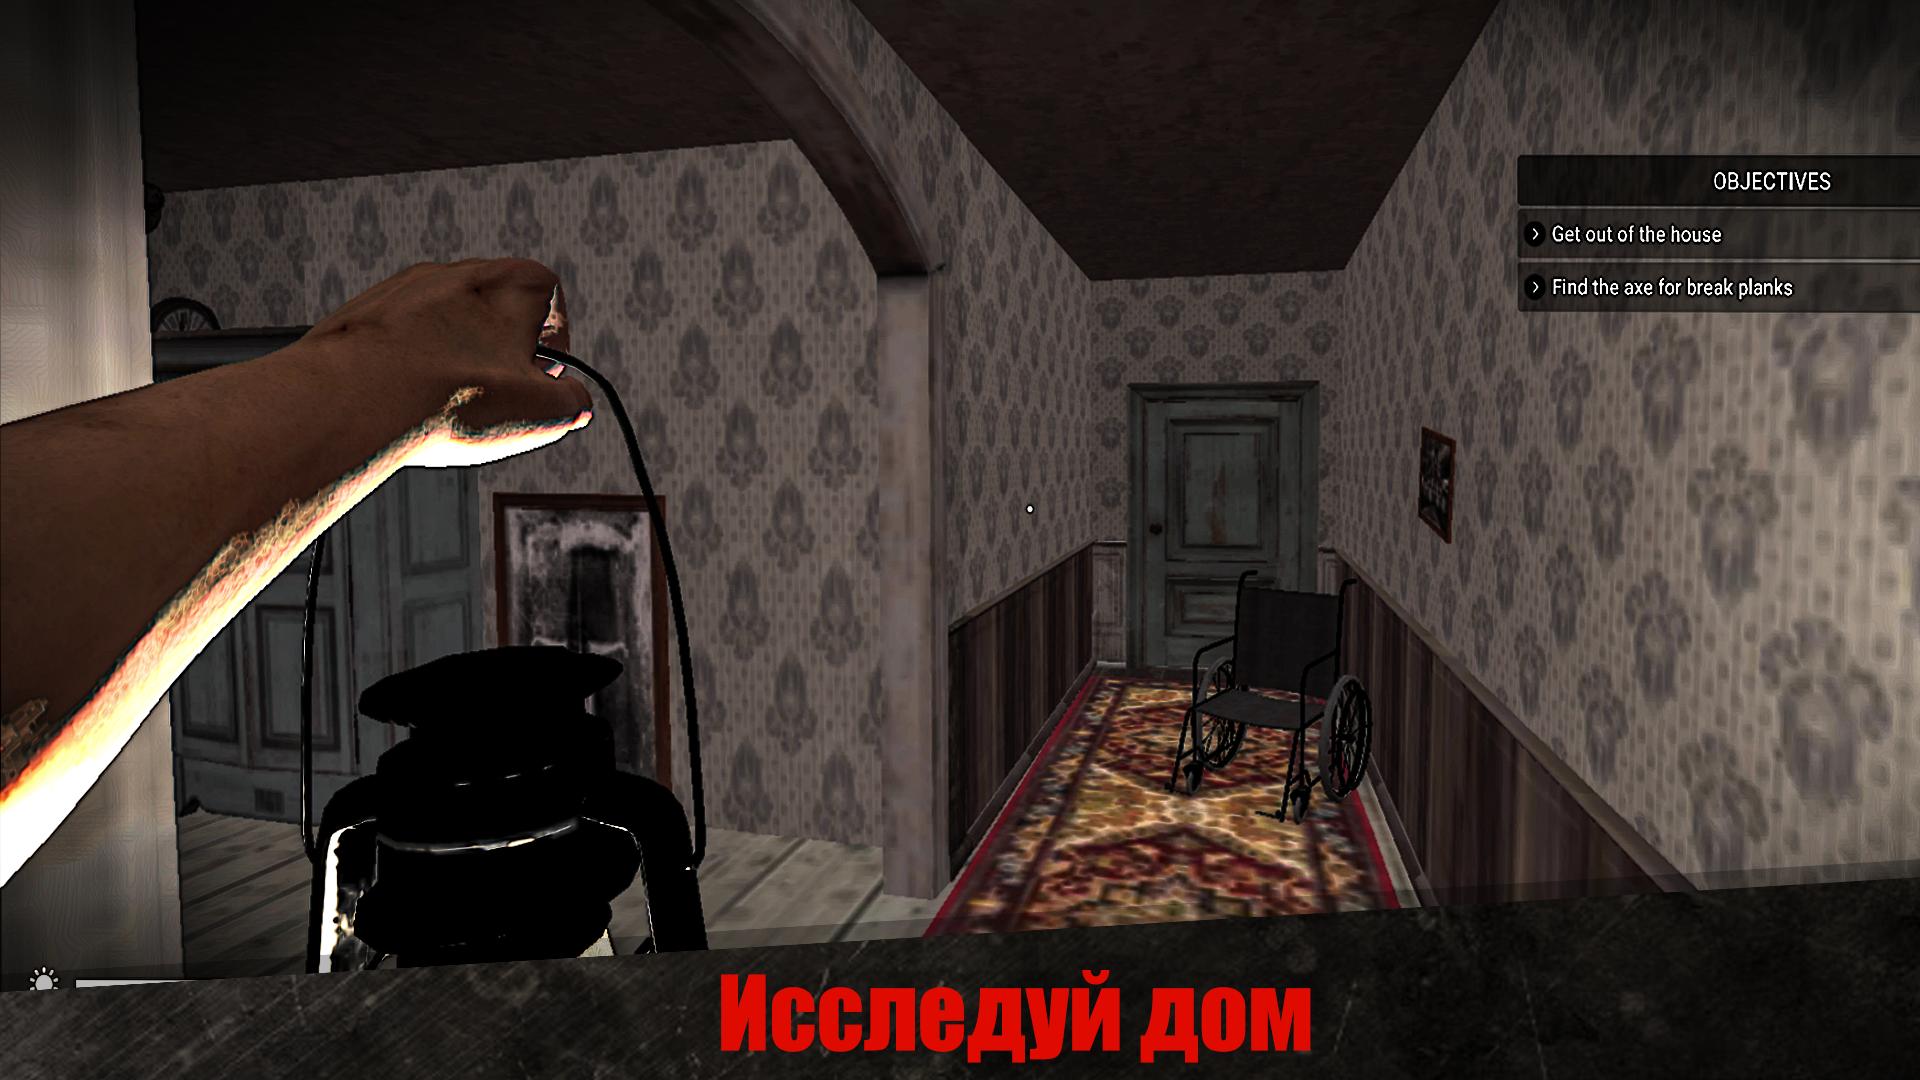 Granny 2021: Scary Granny Survival Horror Game 0.5 Screenshot 4